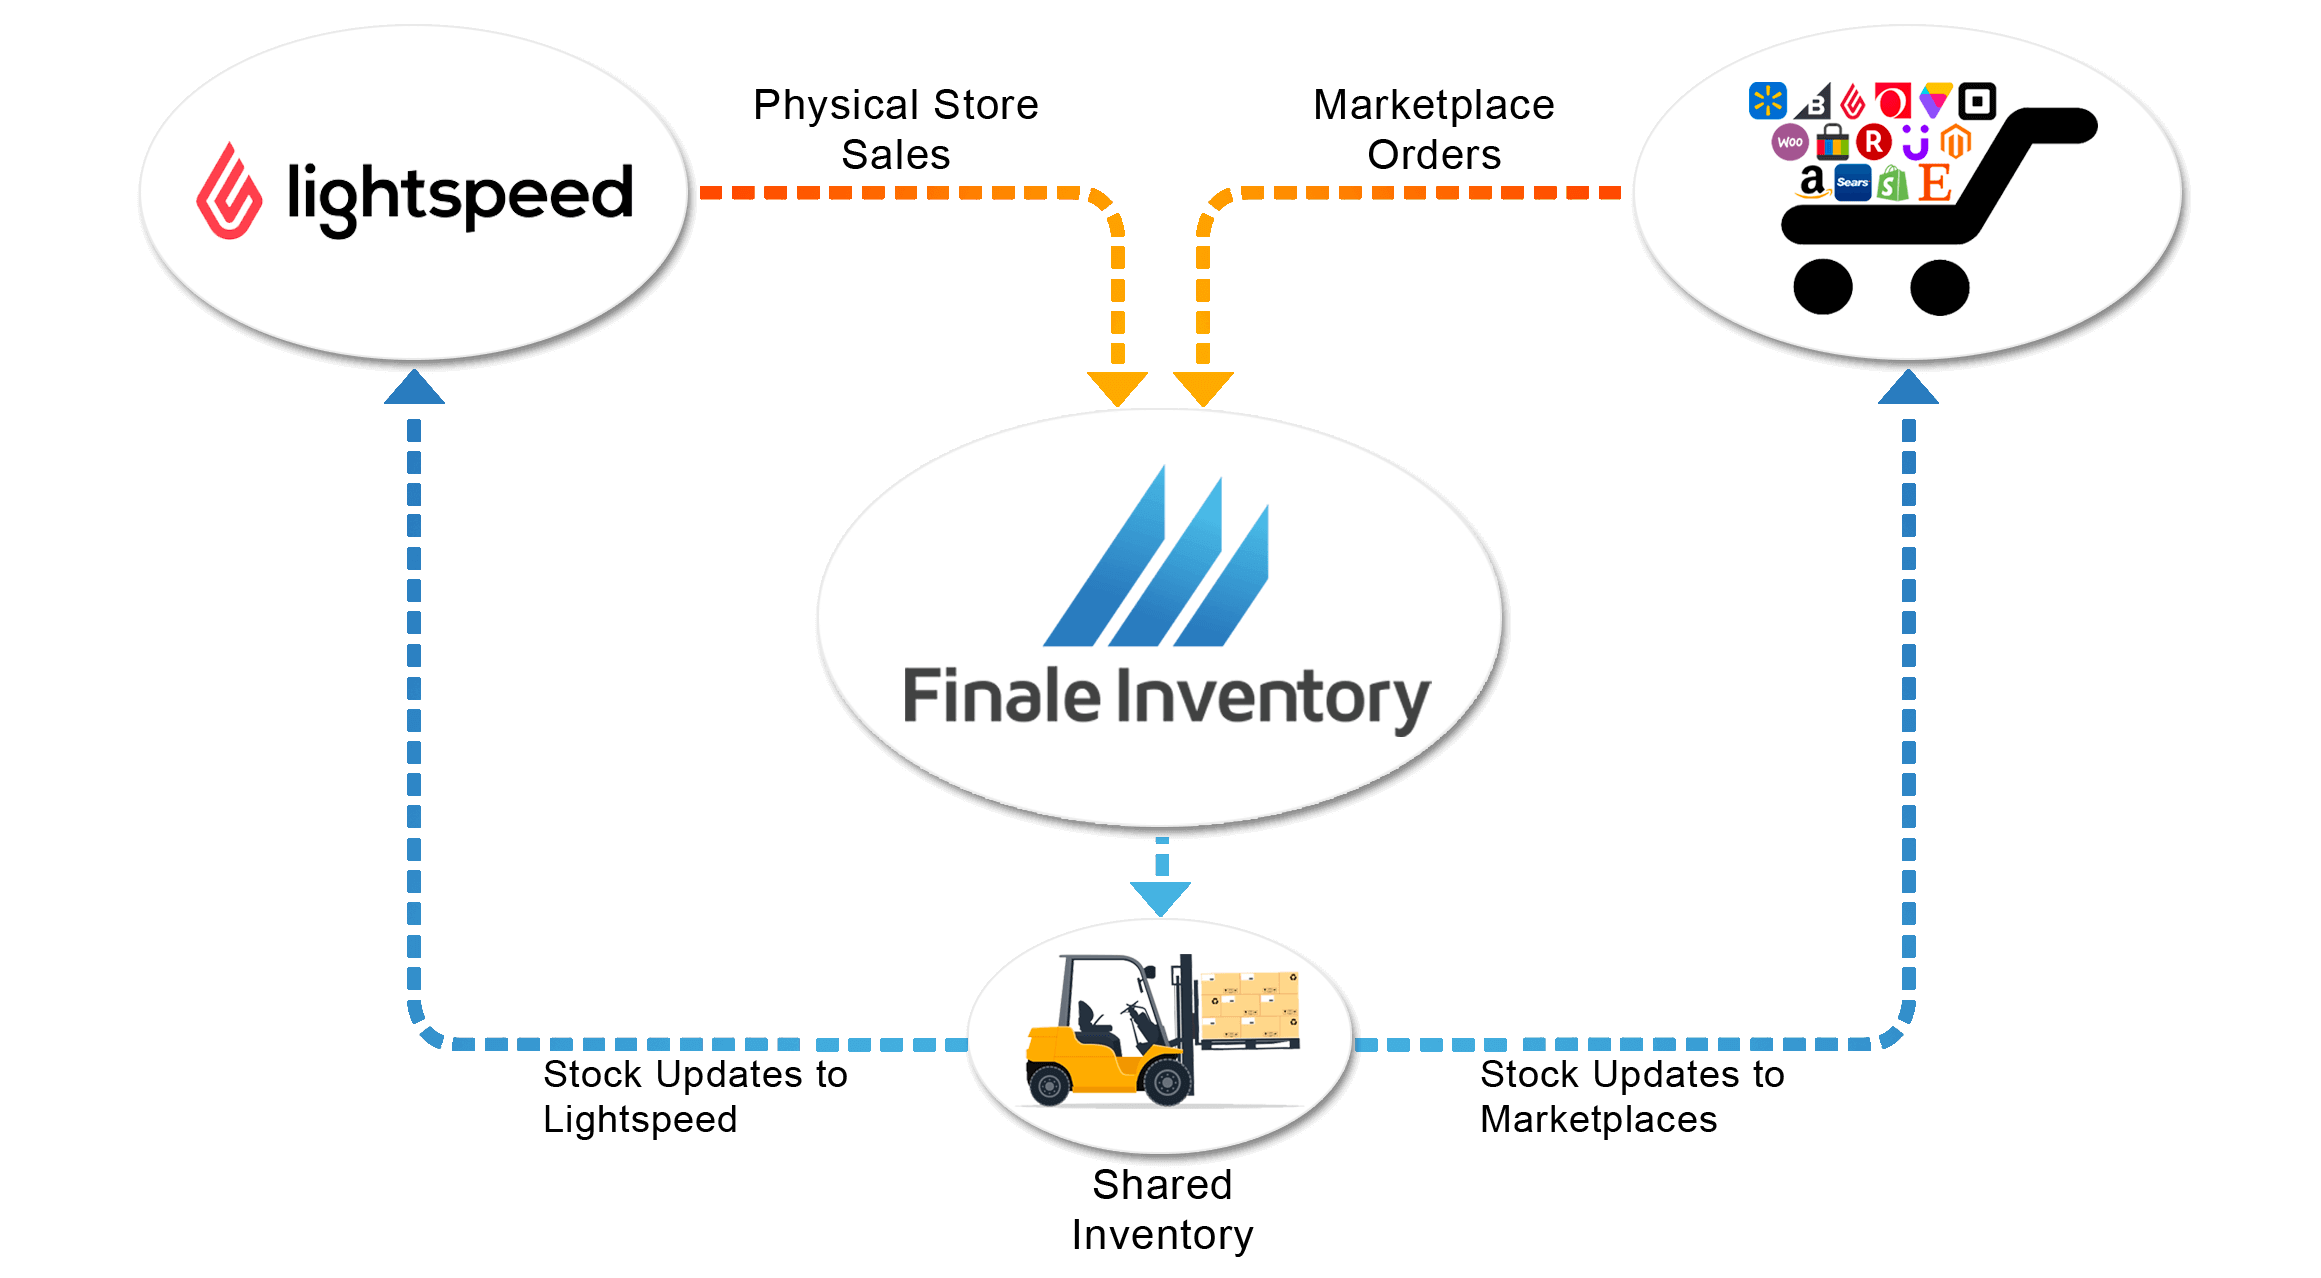 lightspeed inventory management, Lightspeed Inventory Management